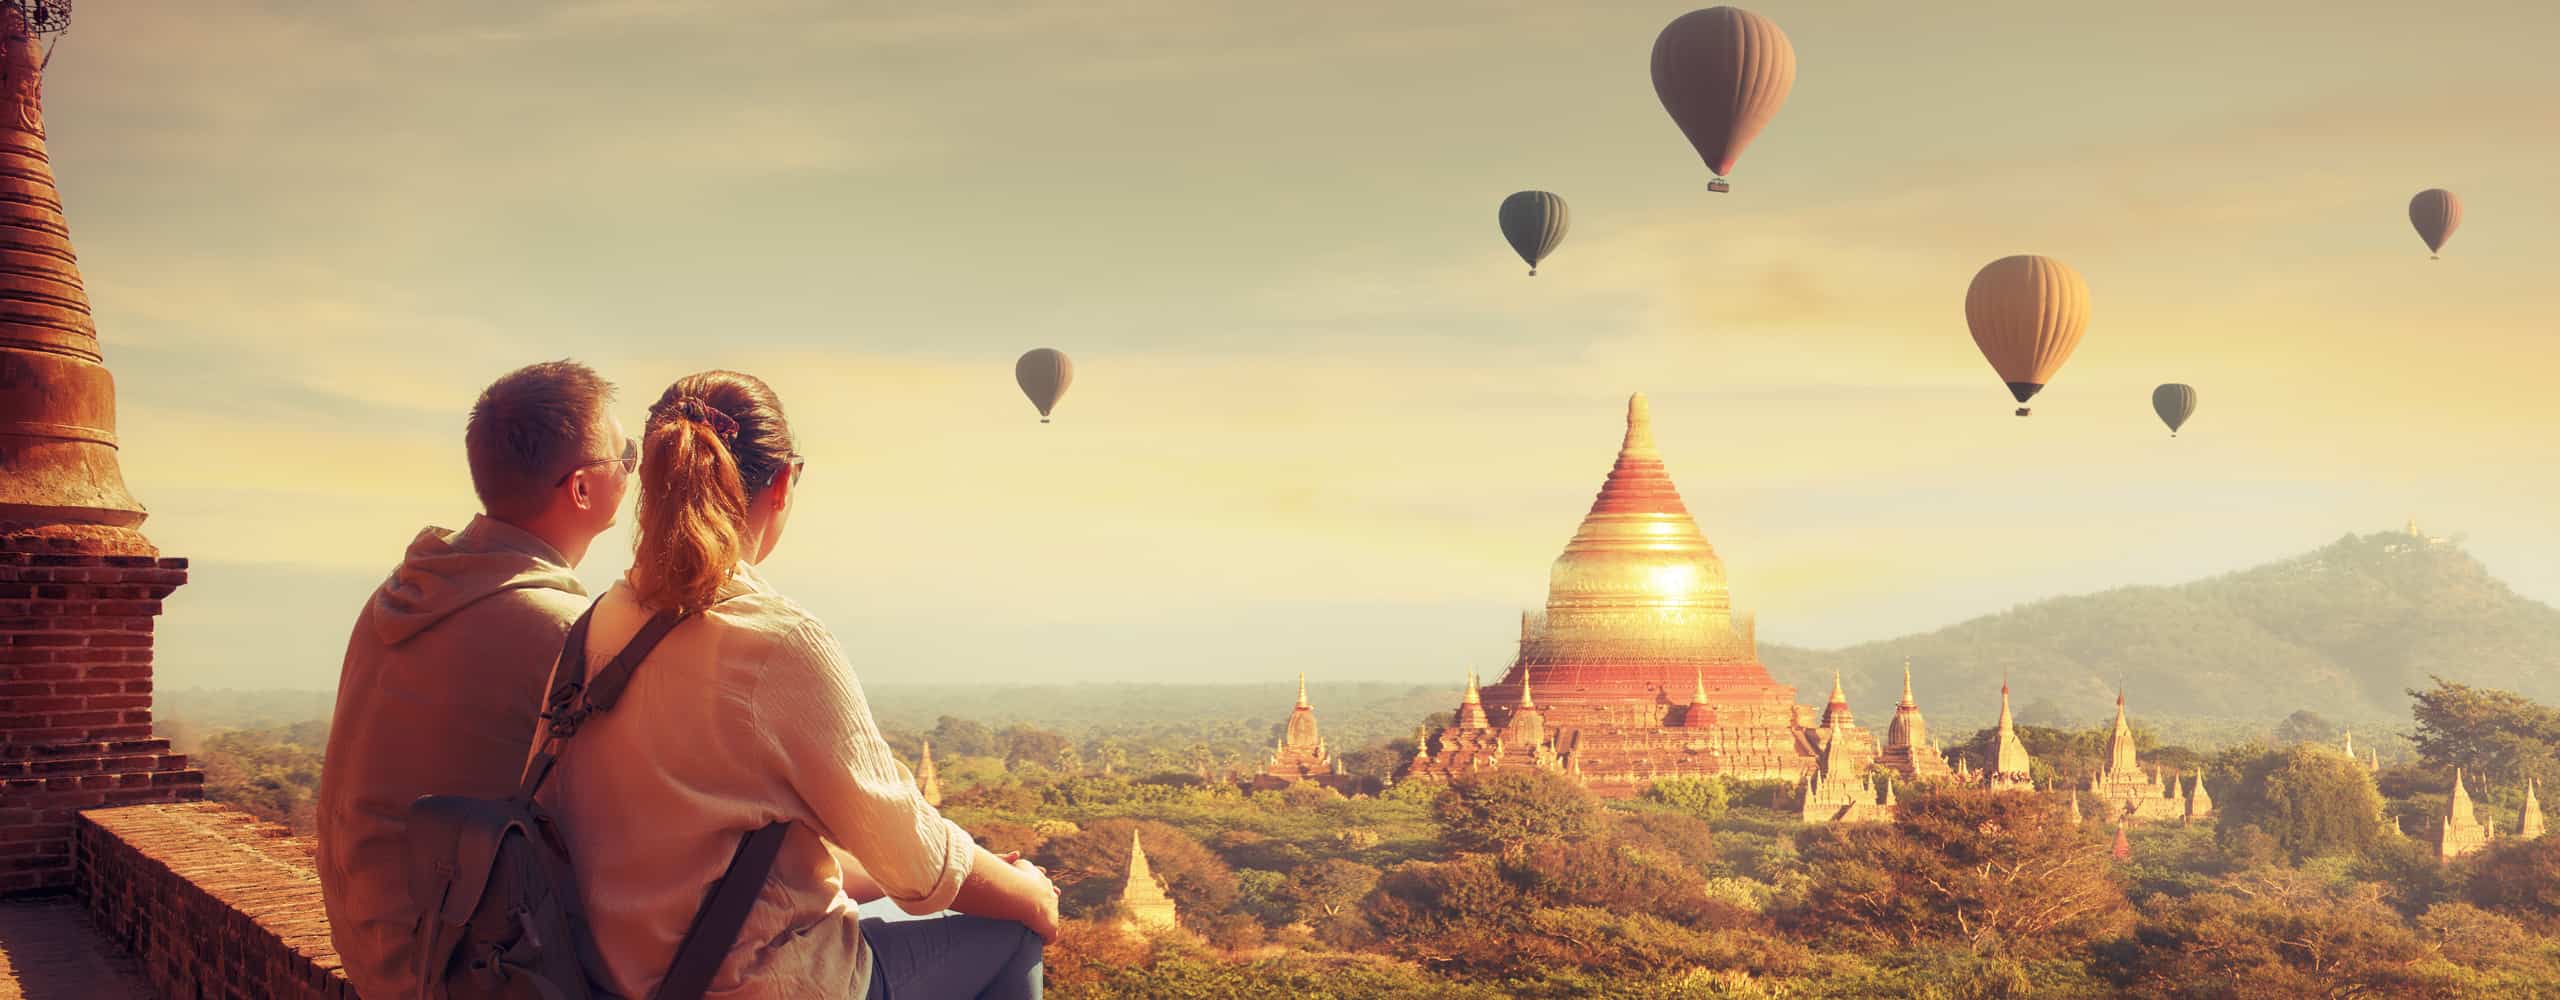 Balloons Over Bagan, Myanmar